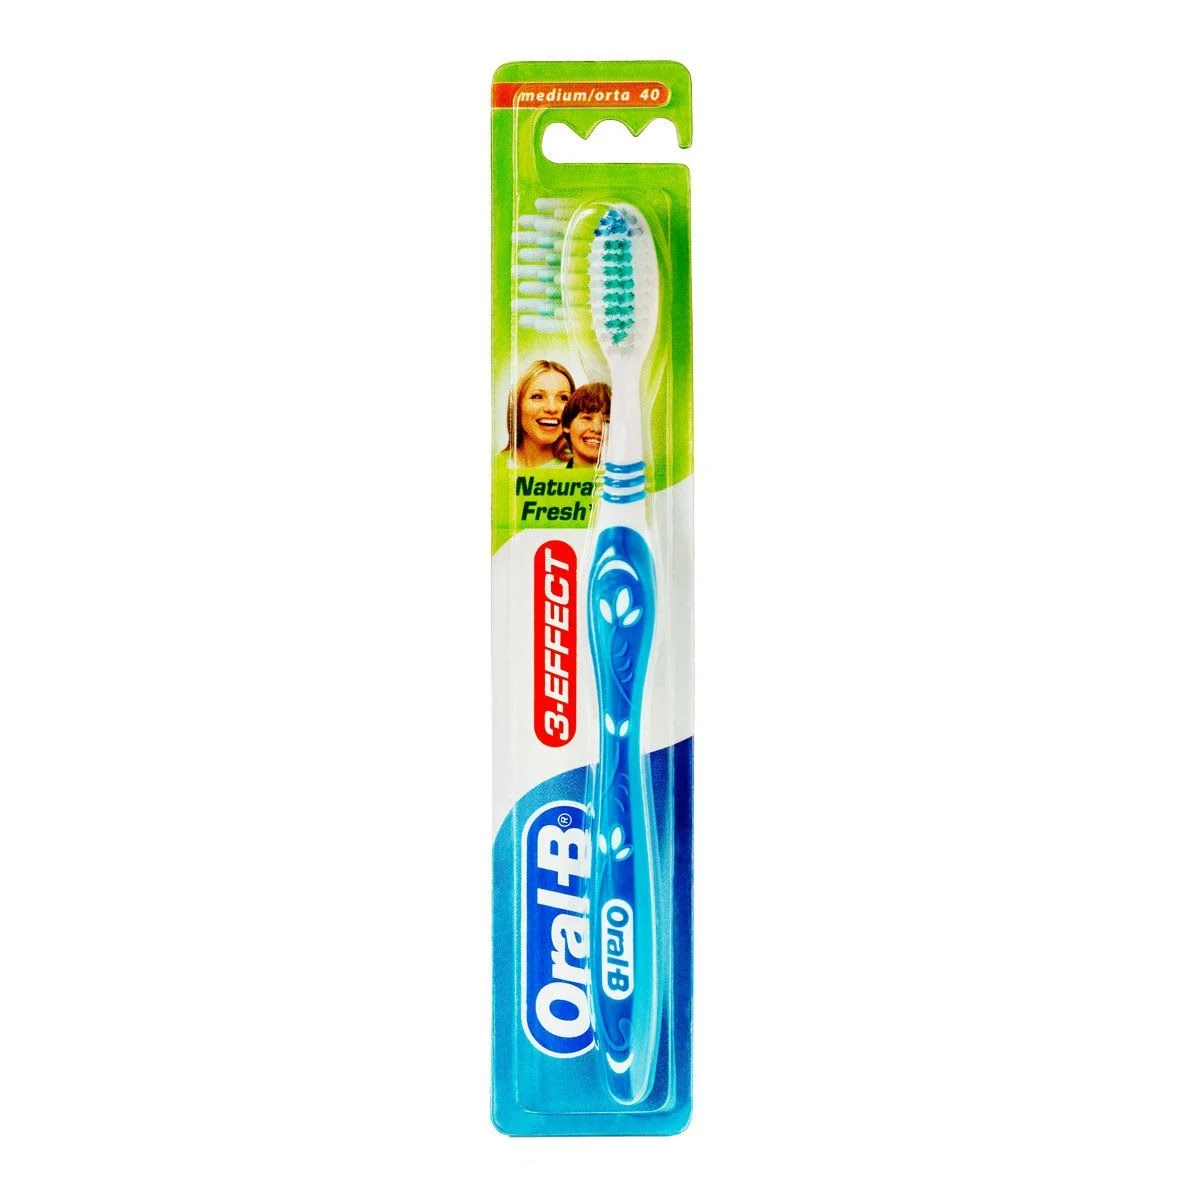 Oral-B 3 Effect Natural Fresh toothbrush 